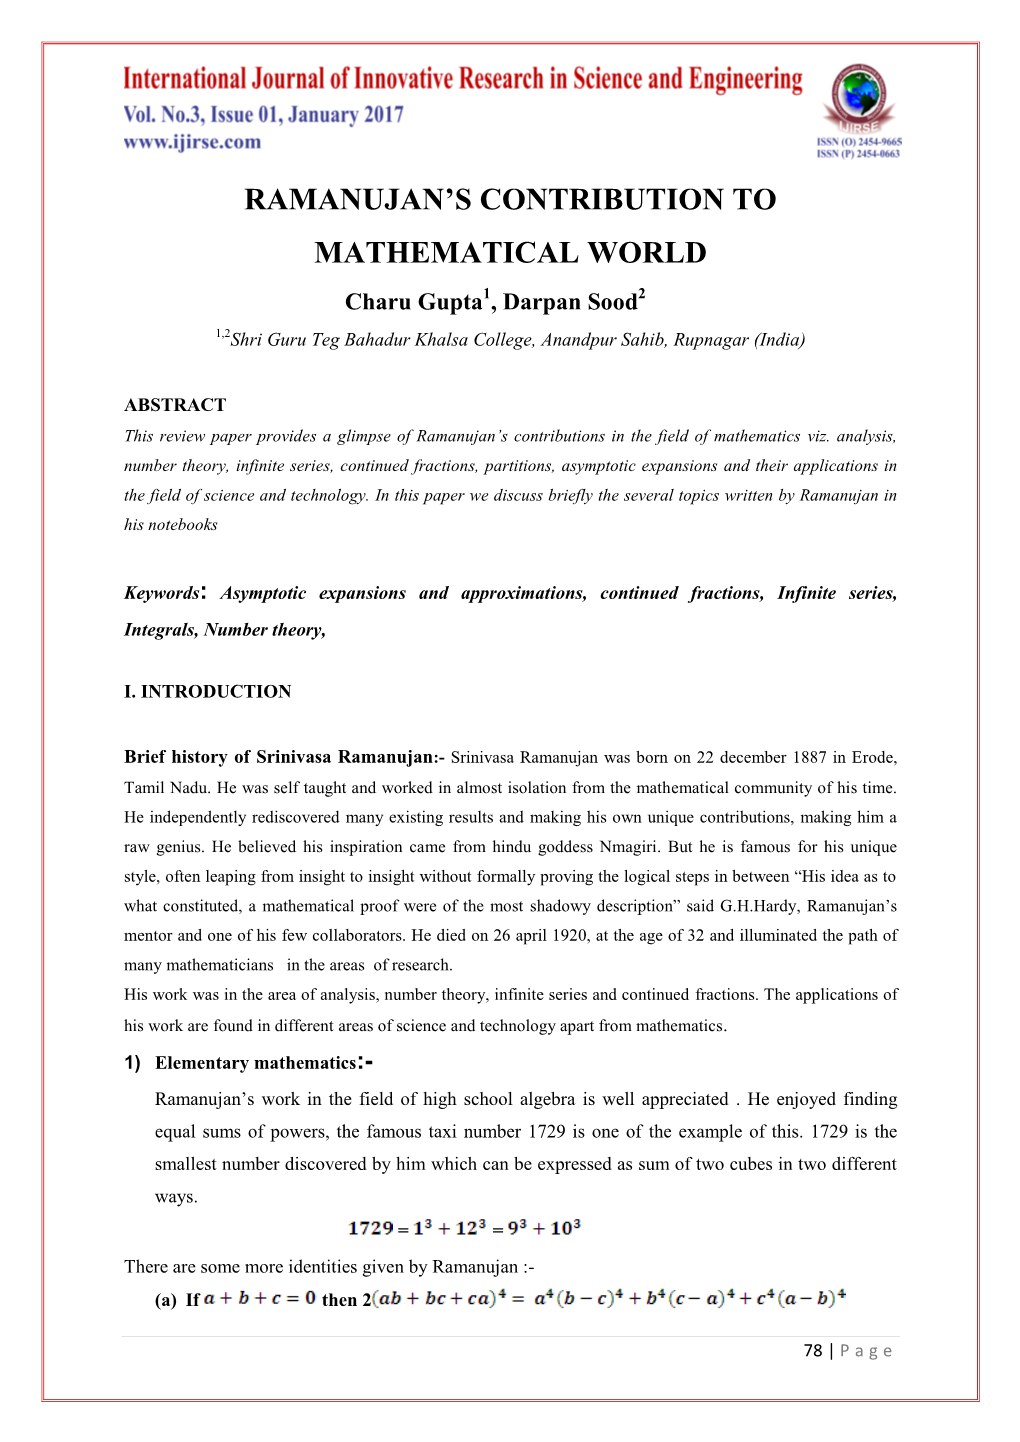 Ramanujan's Contribution to Mathematical World